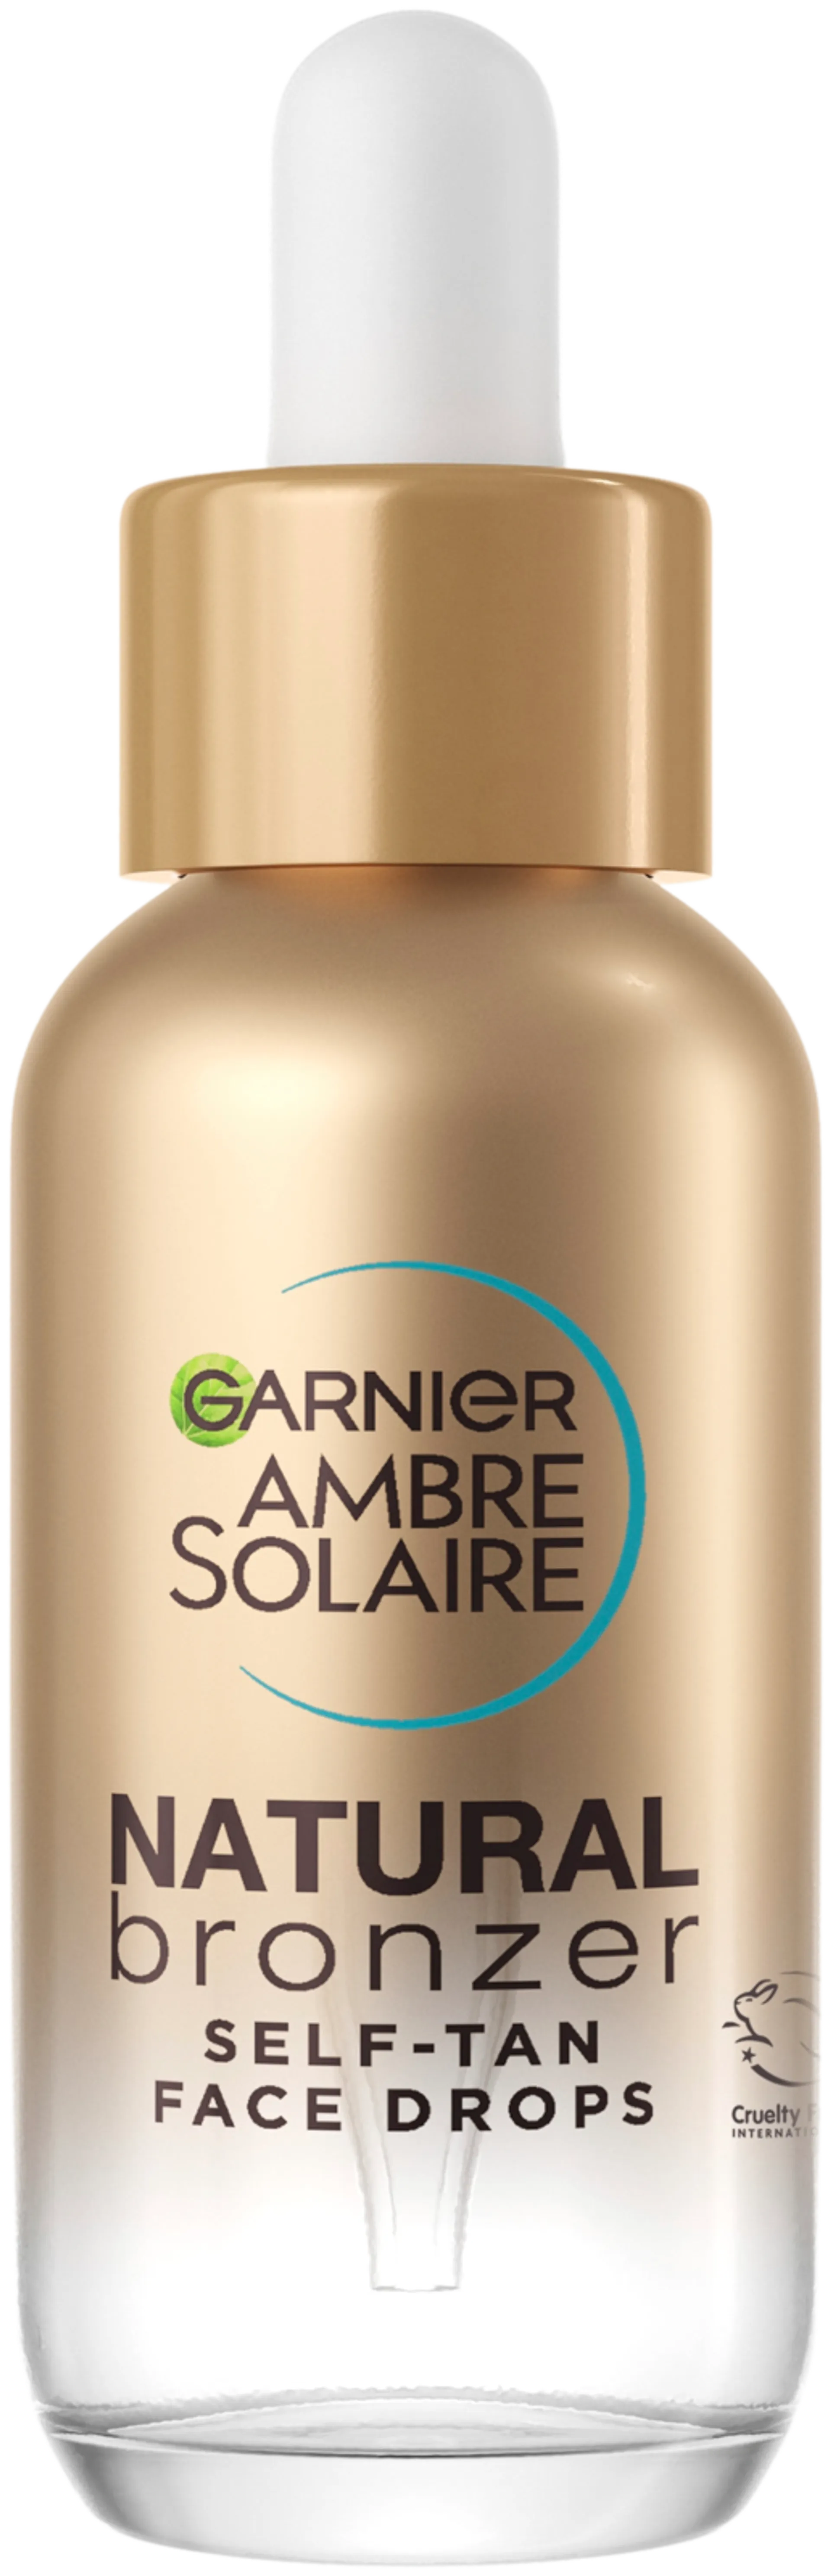 Garnier Ambre Solaire Natural Bronzer Self-Tan Drops normaalille iholle 30 ml - 1